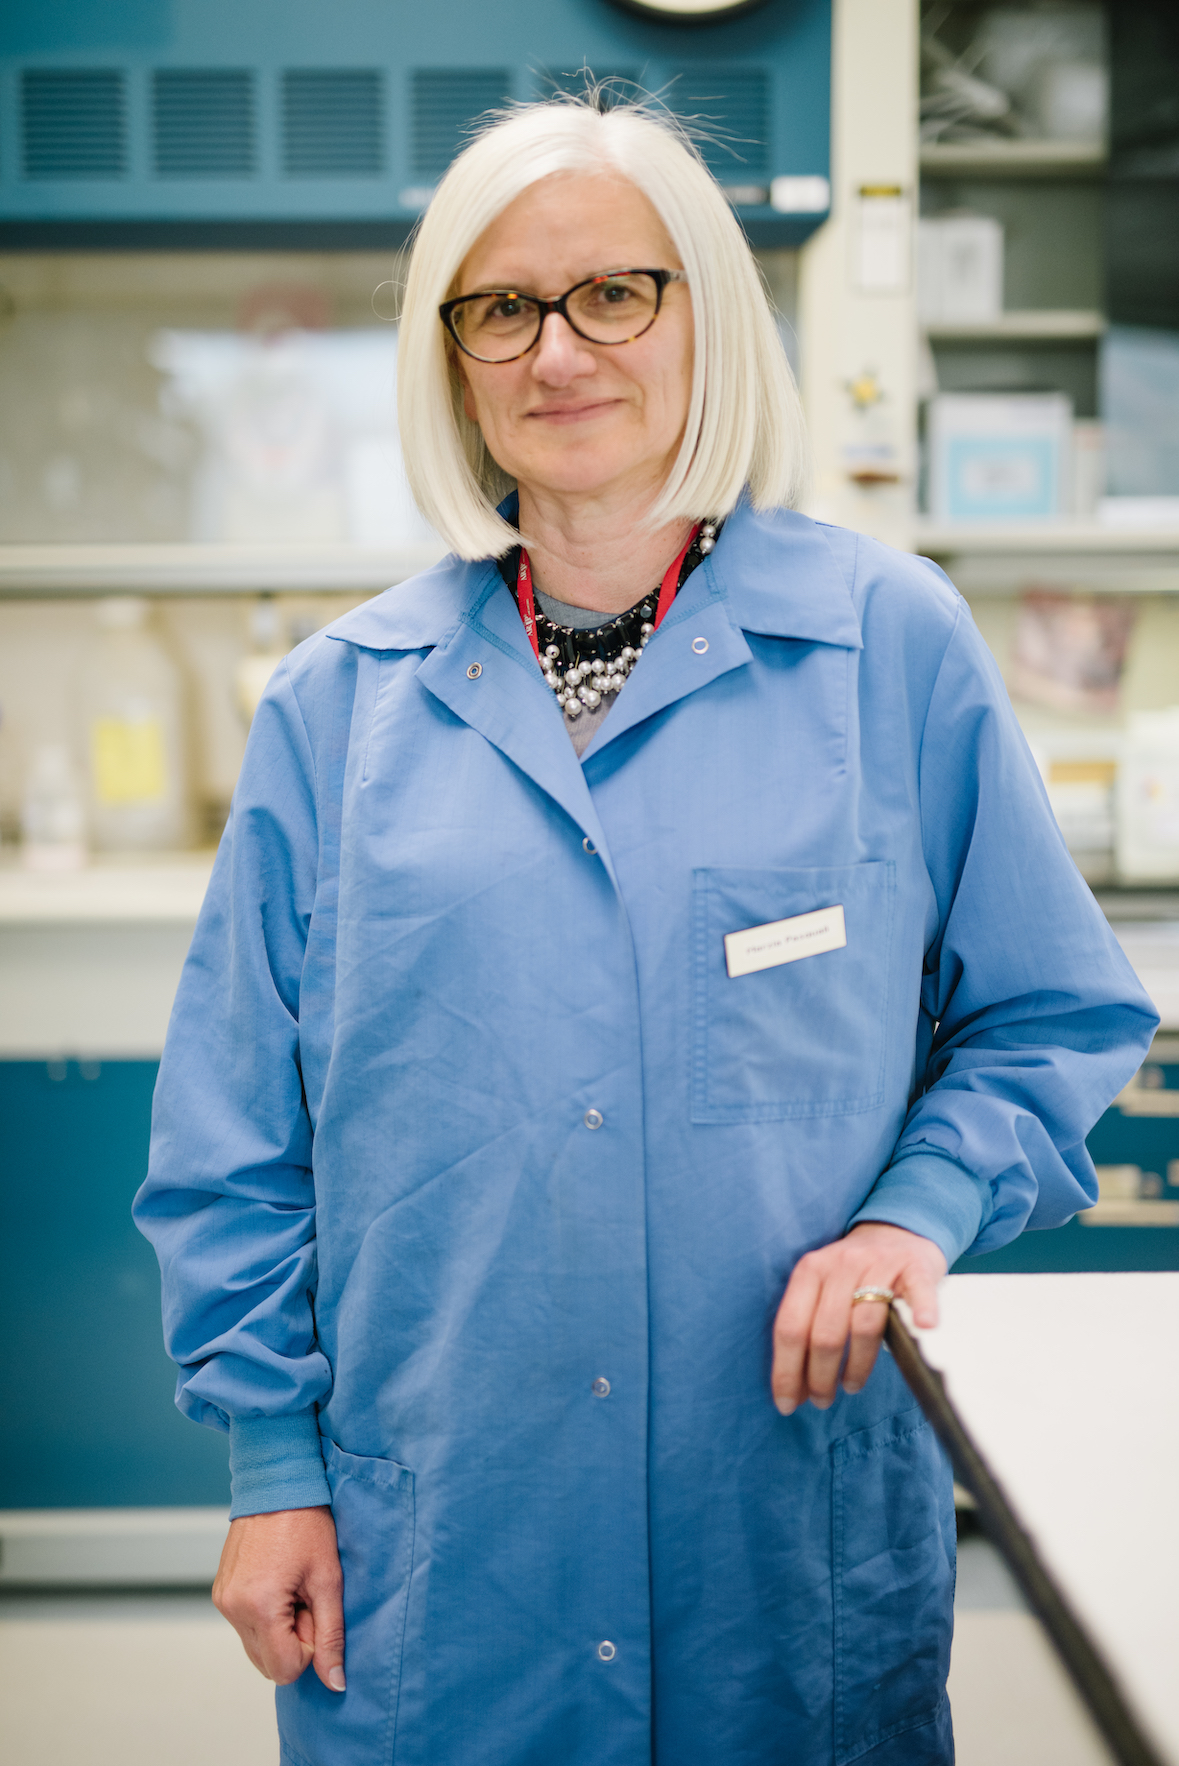 Marzia Pasquali, PhD, standing in the laboratory.